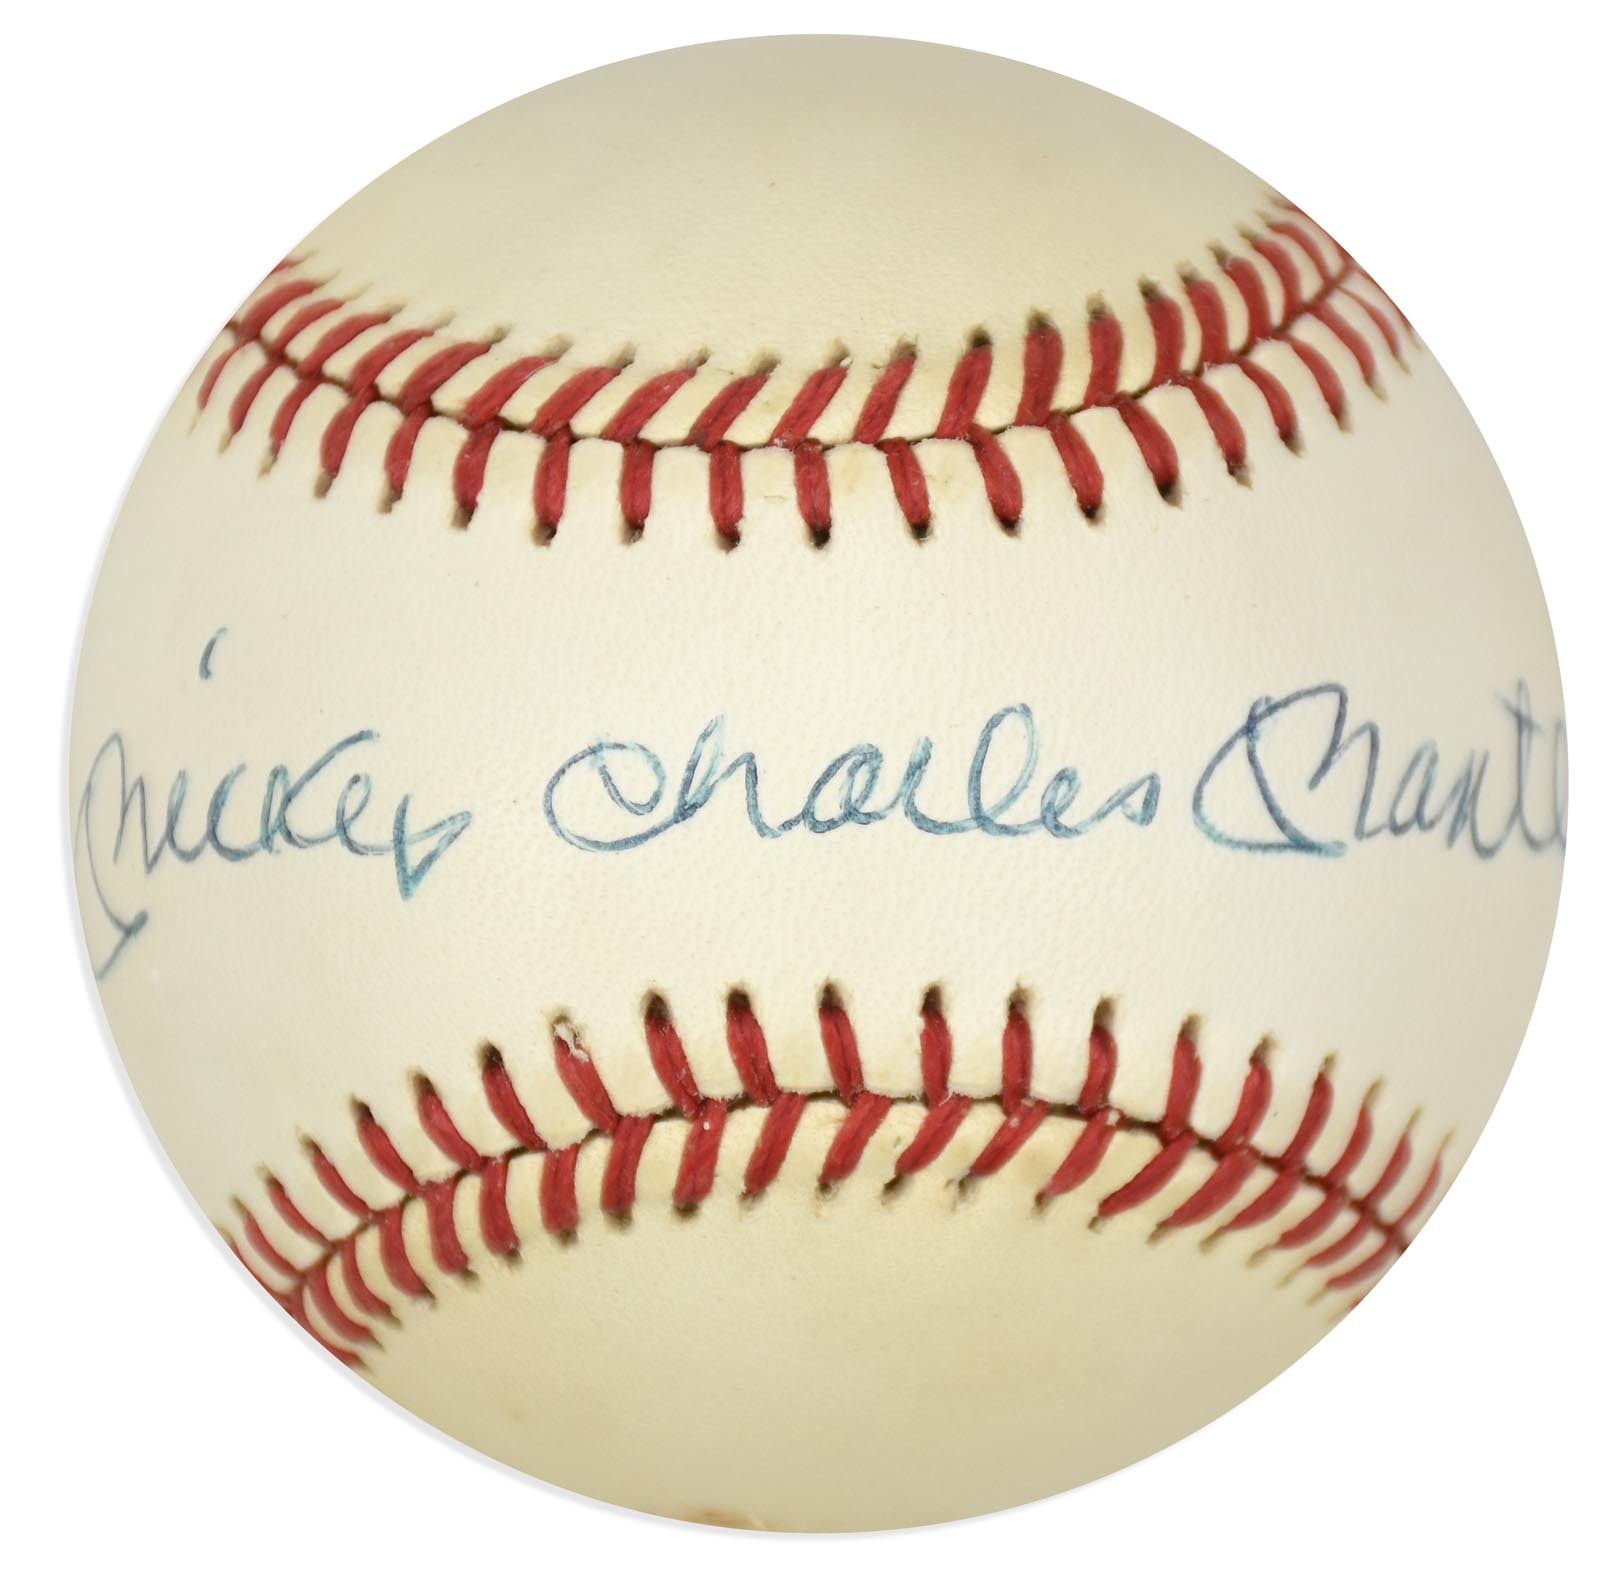 - "Mickey Charles Mantle" Full Name Signed Baseball (PSA)